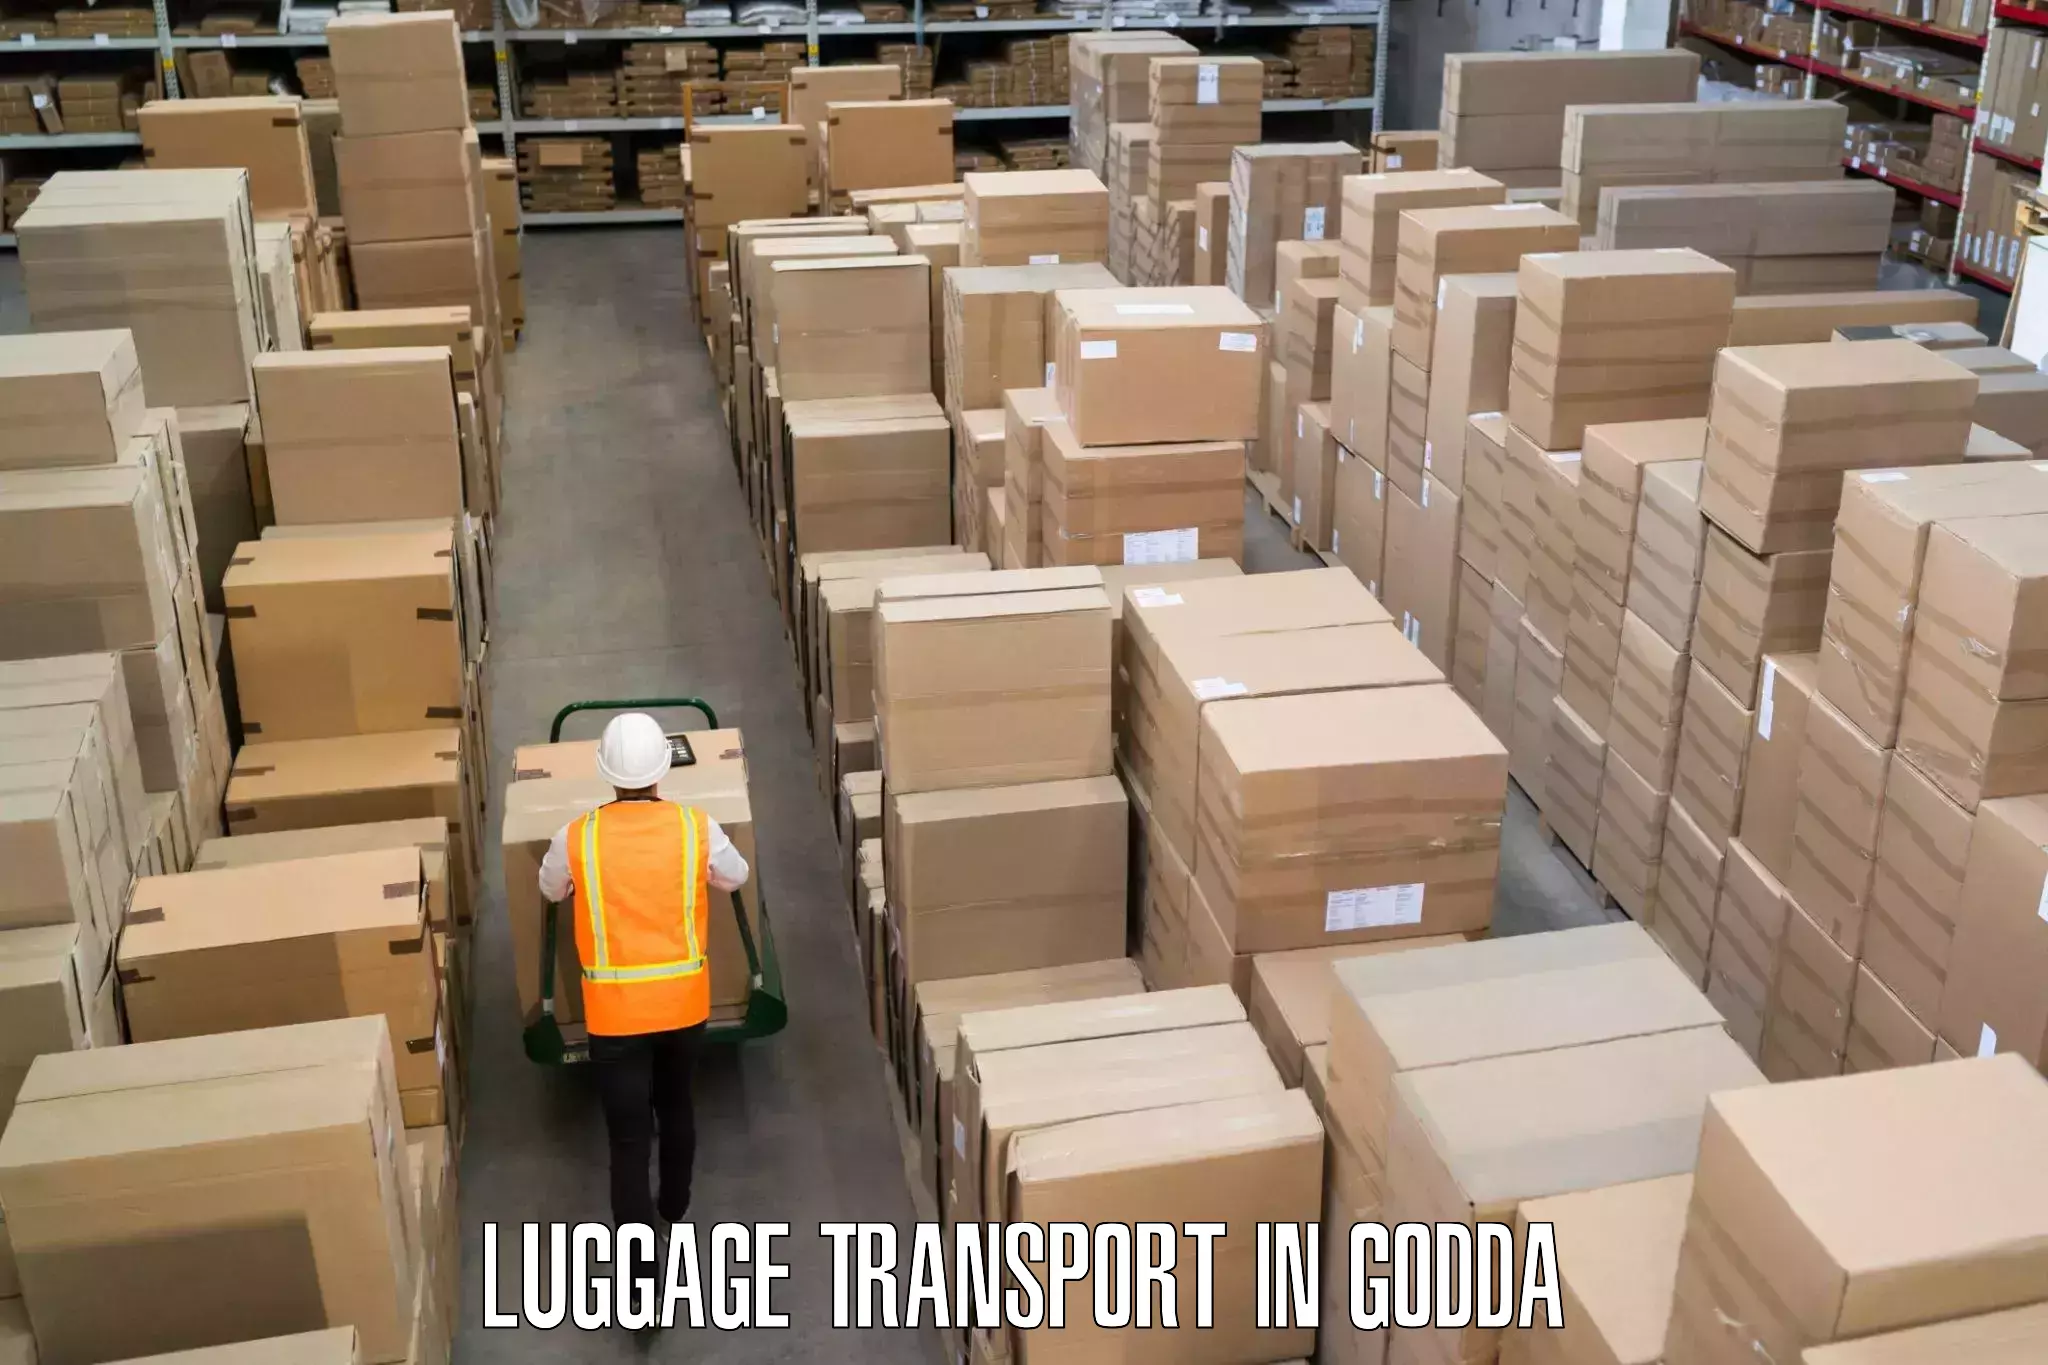 Luggage transport operations in Godda